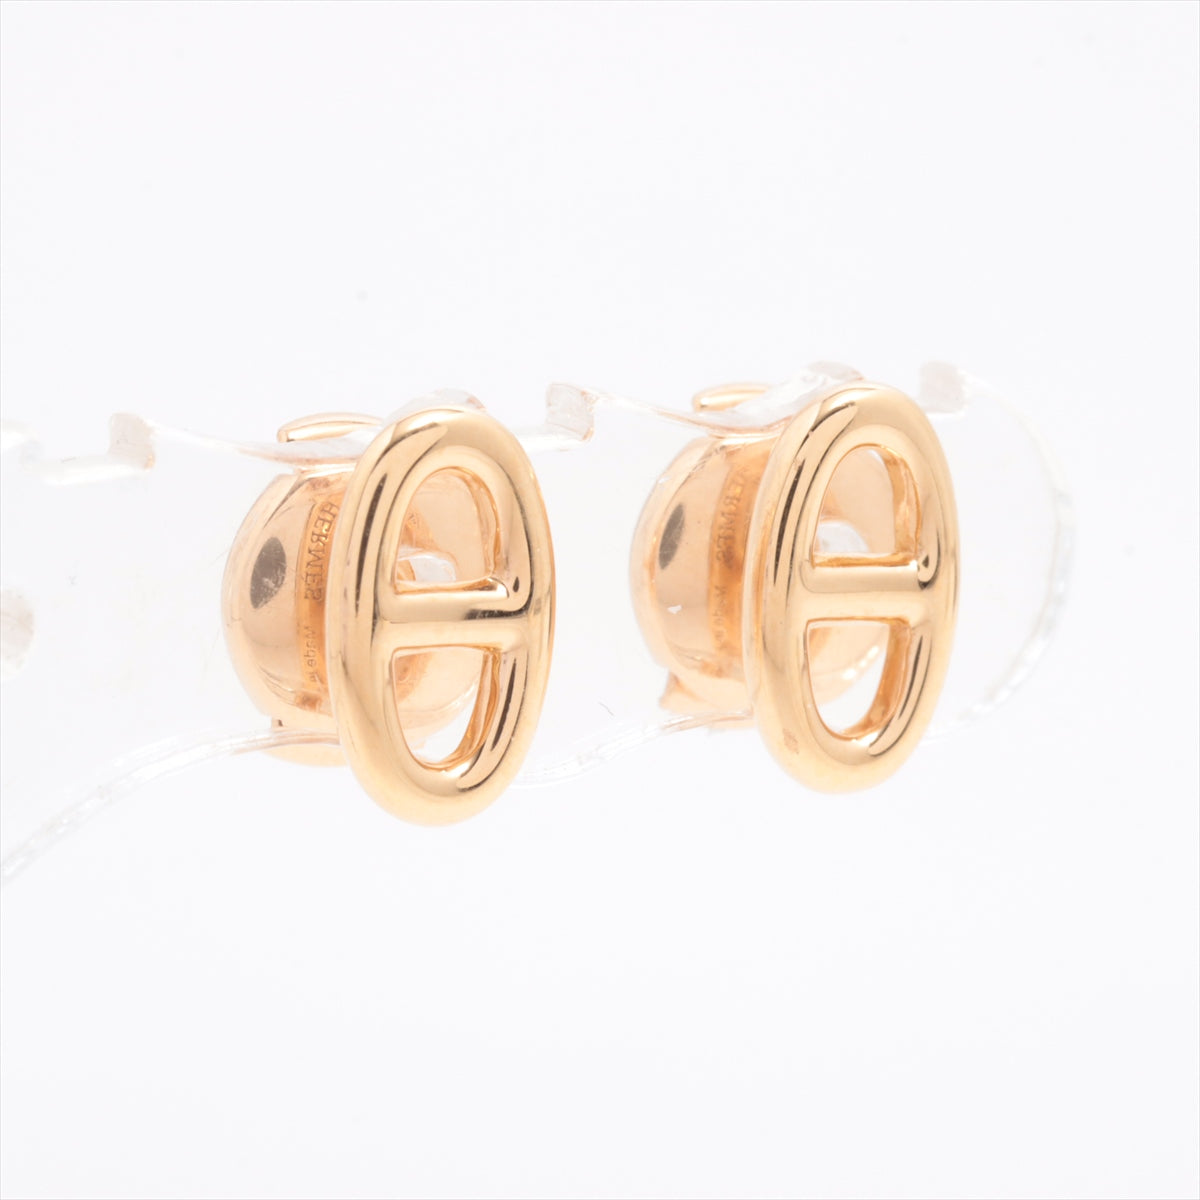 Hermès Chaîne d'Ancre Piercing jewelry 750(PG) 2.4g